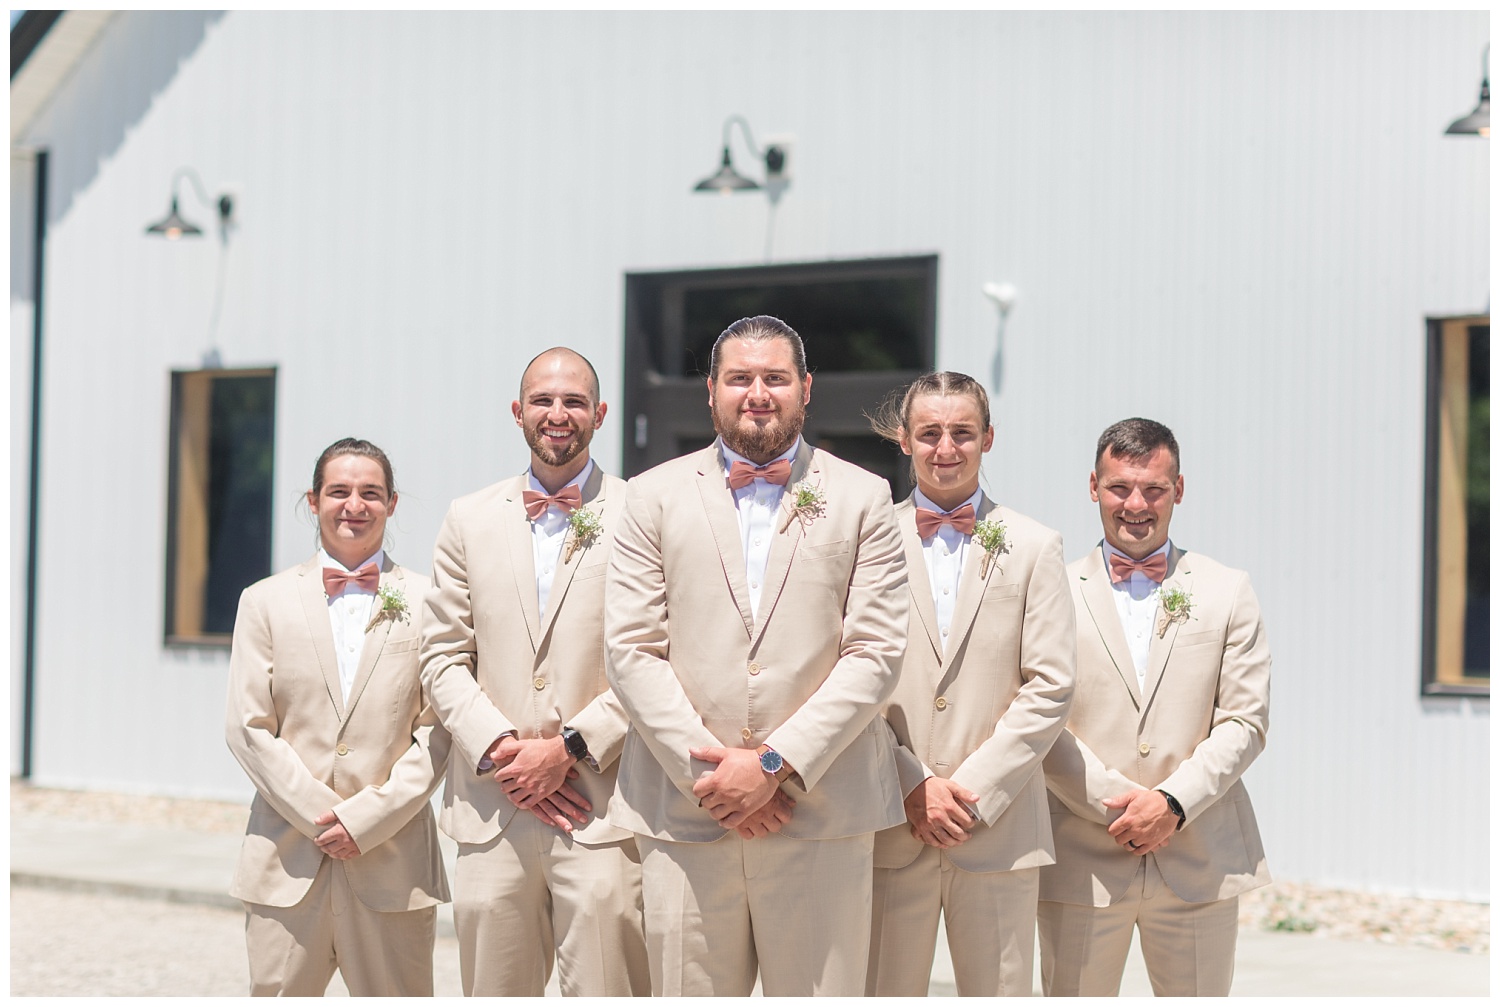 groomsmen posing together outside the wedding venue